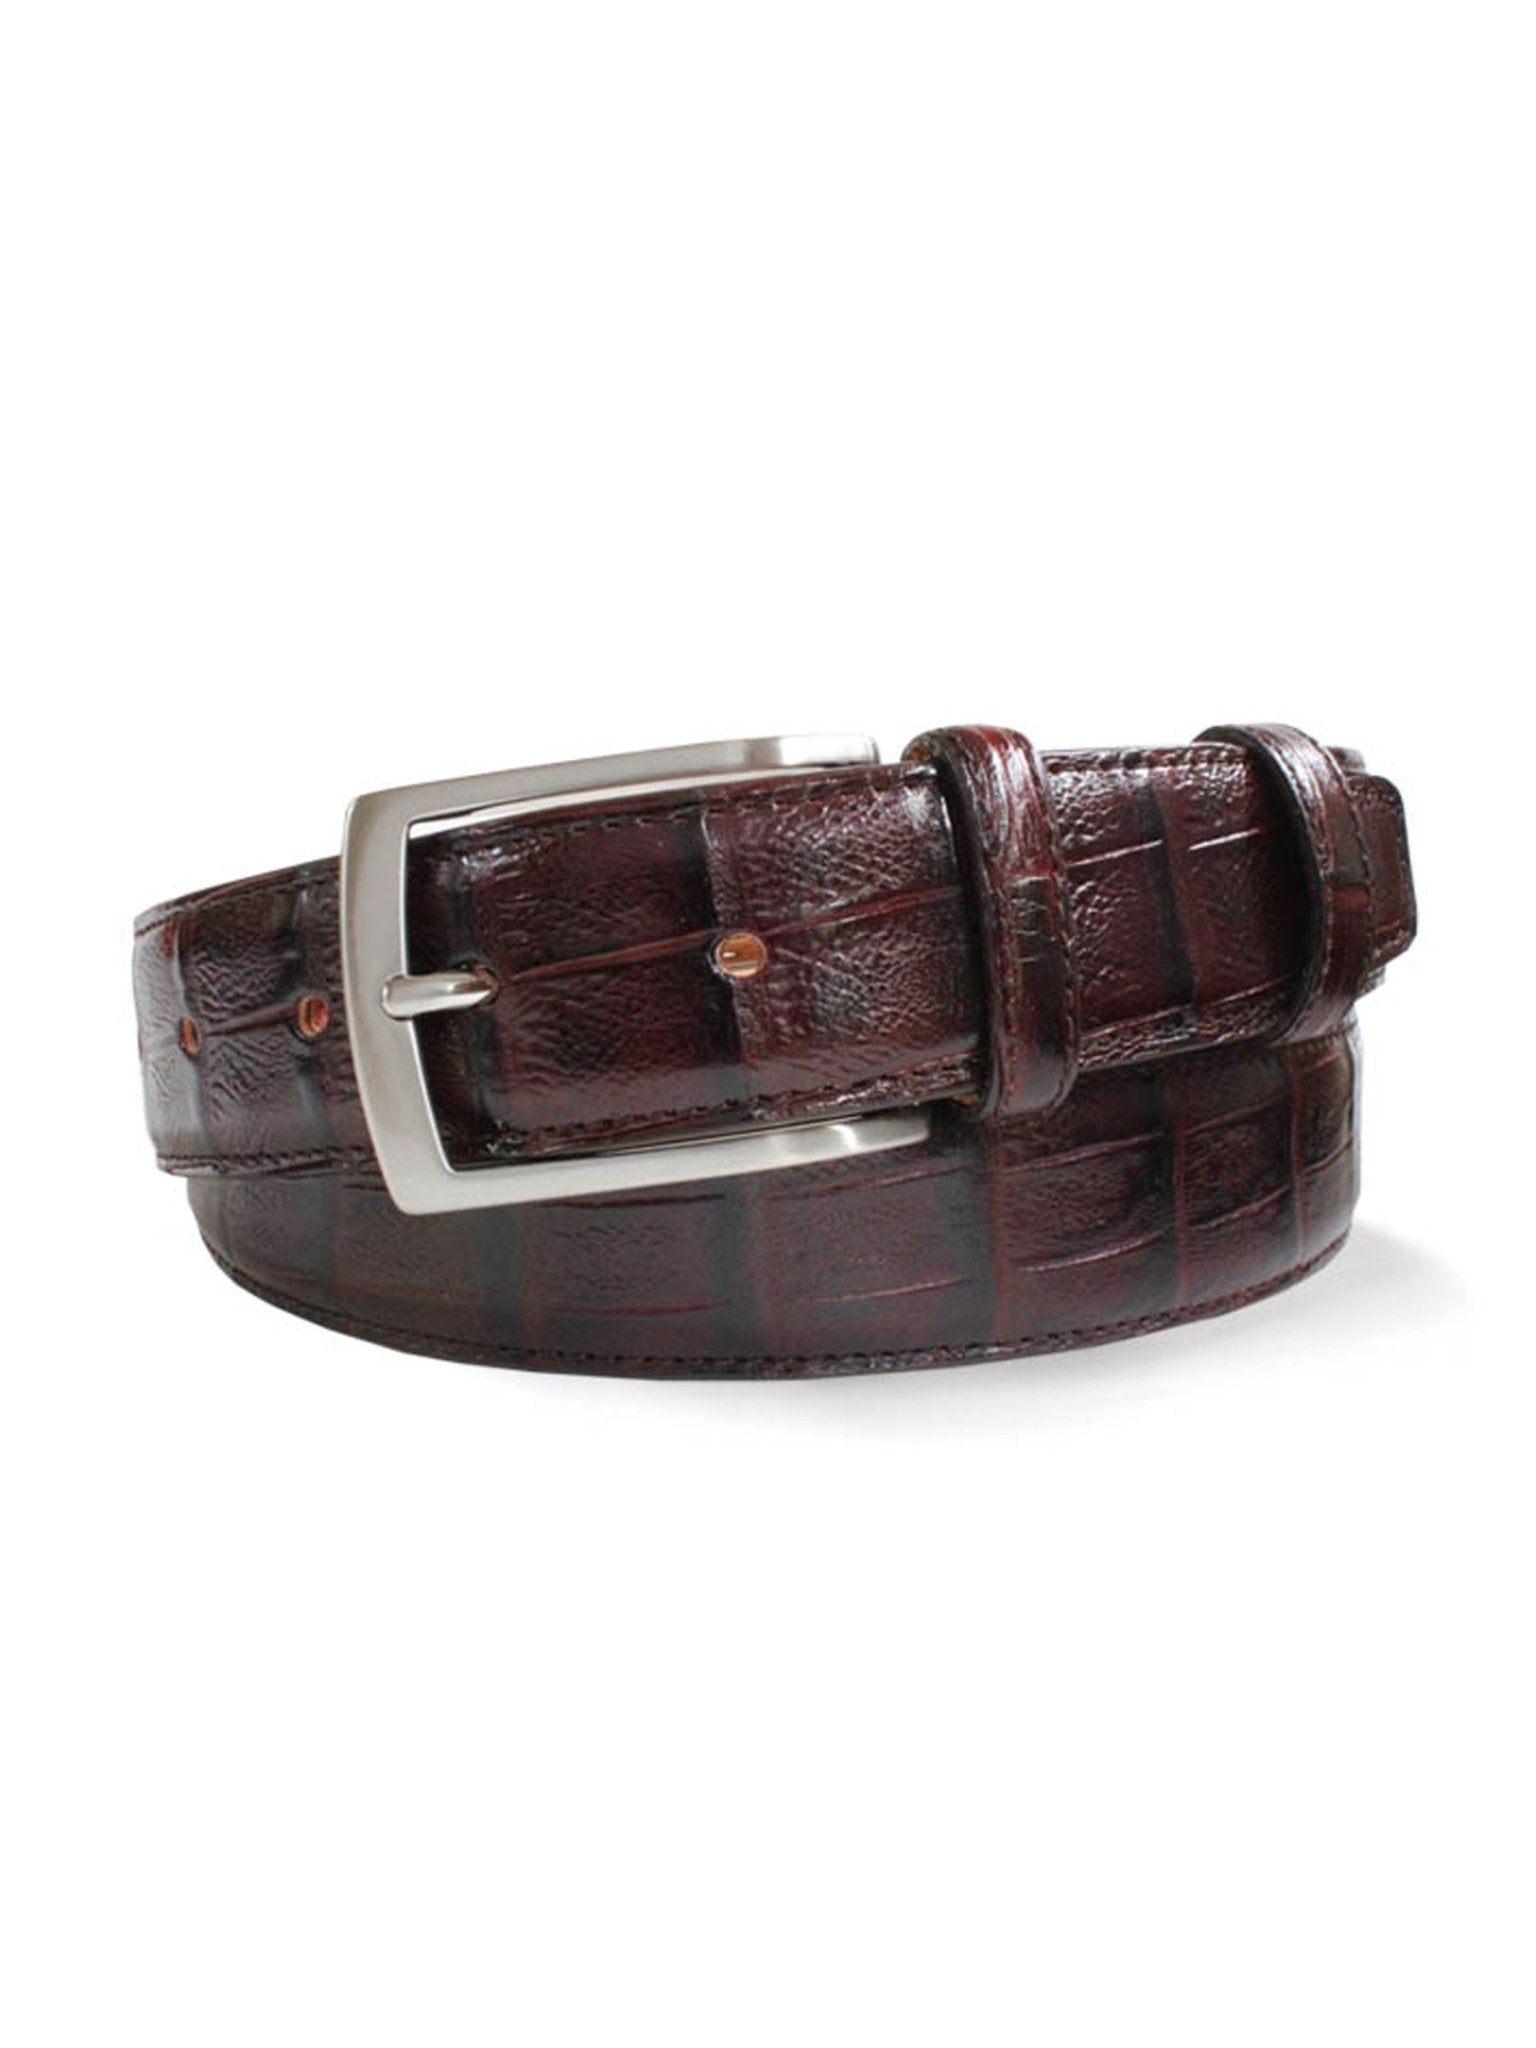 4elementsclothingRobert CharlesRobert Charles Belts - 1502 Crocodile print Leather Mens Belt - Made in Italy - 100% Leather - 35mmBelts1502/Brown/S